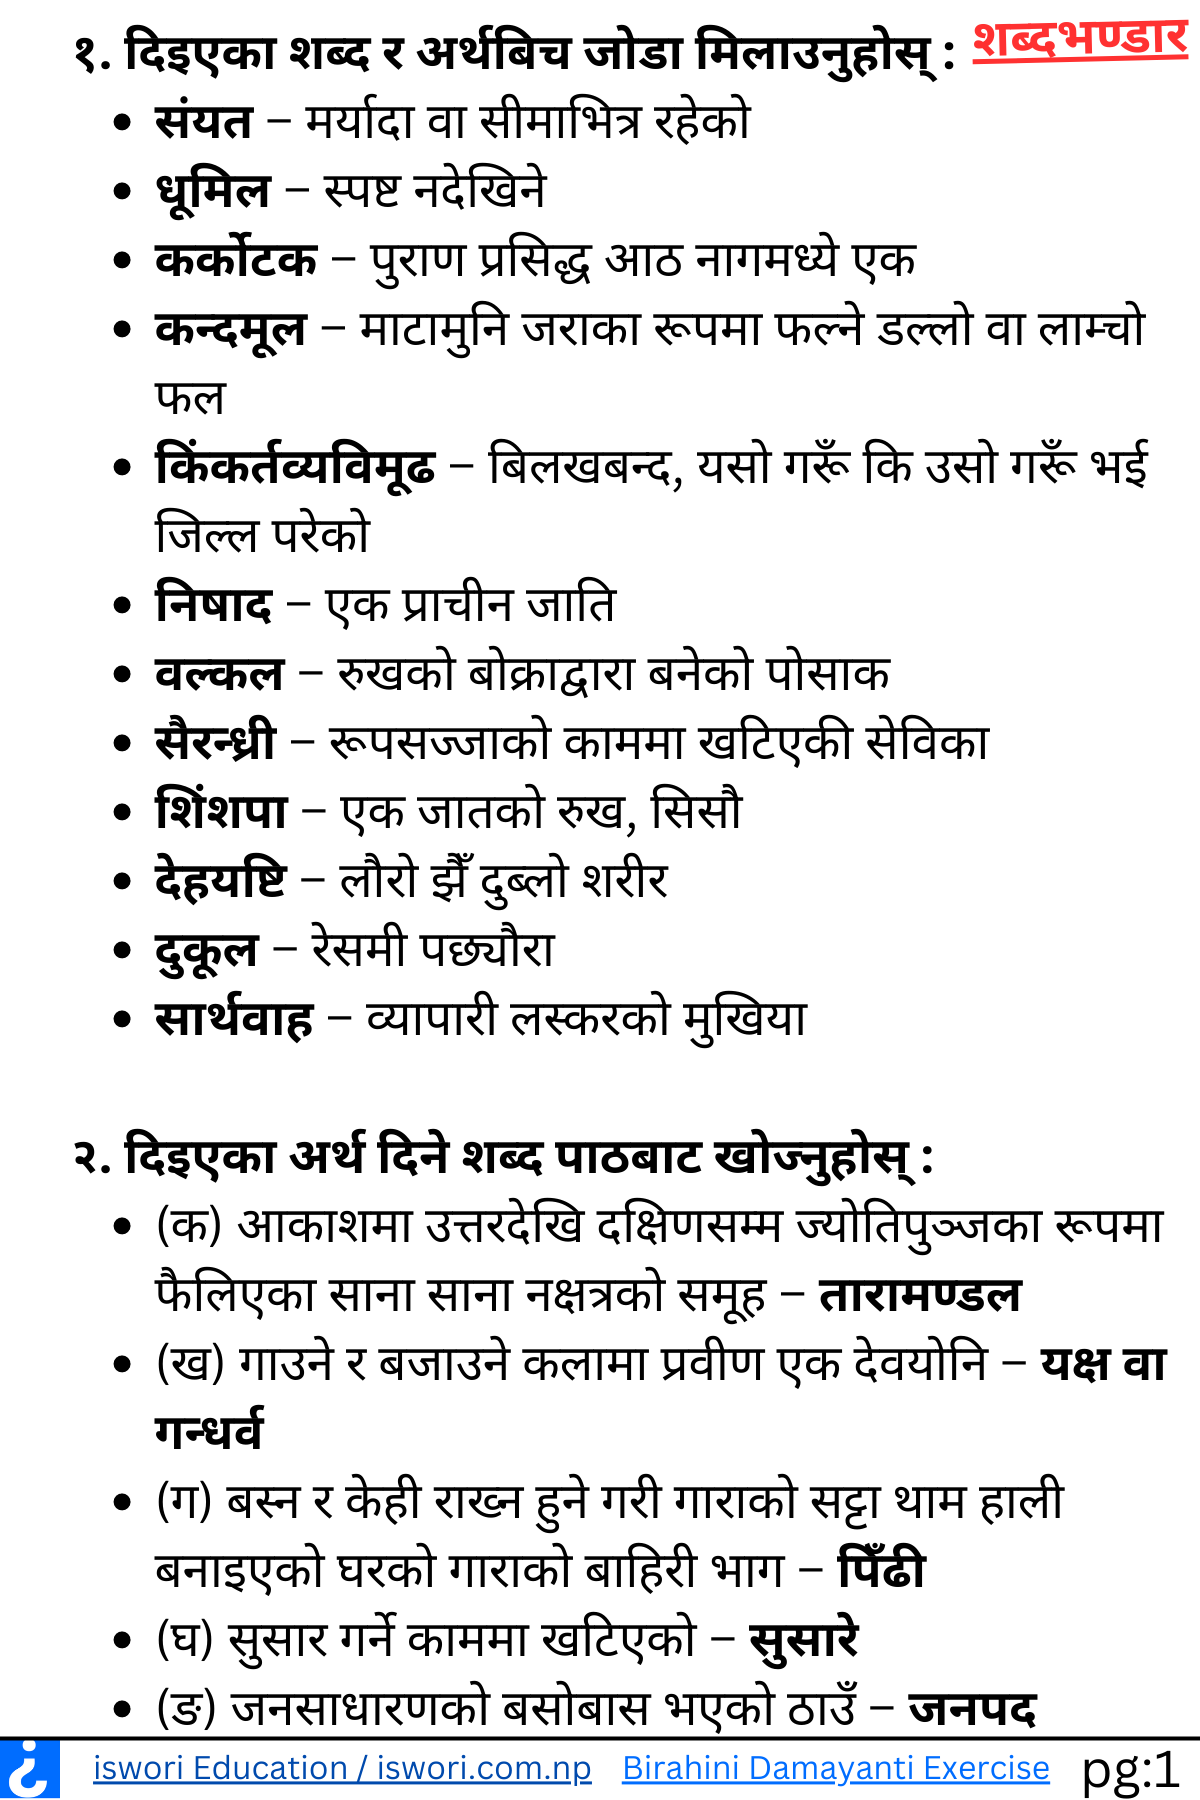 Birahini Damayanti Exercise, Summary Class 12 Nepali Unit 2